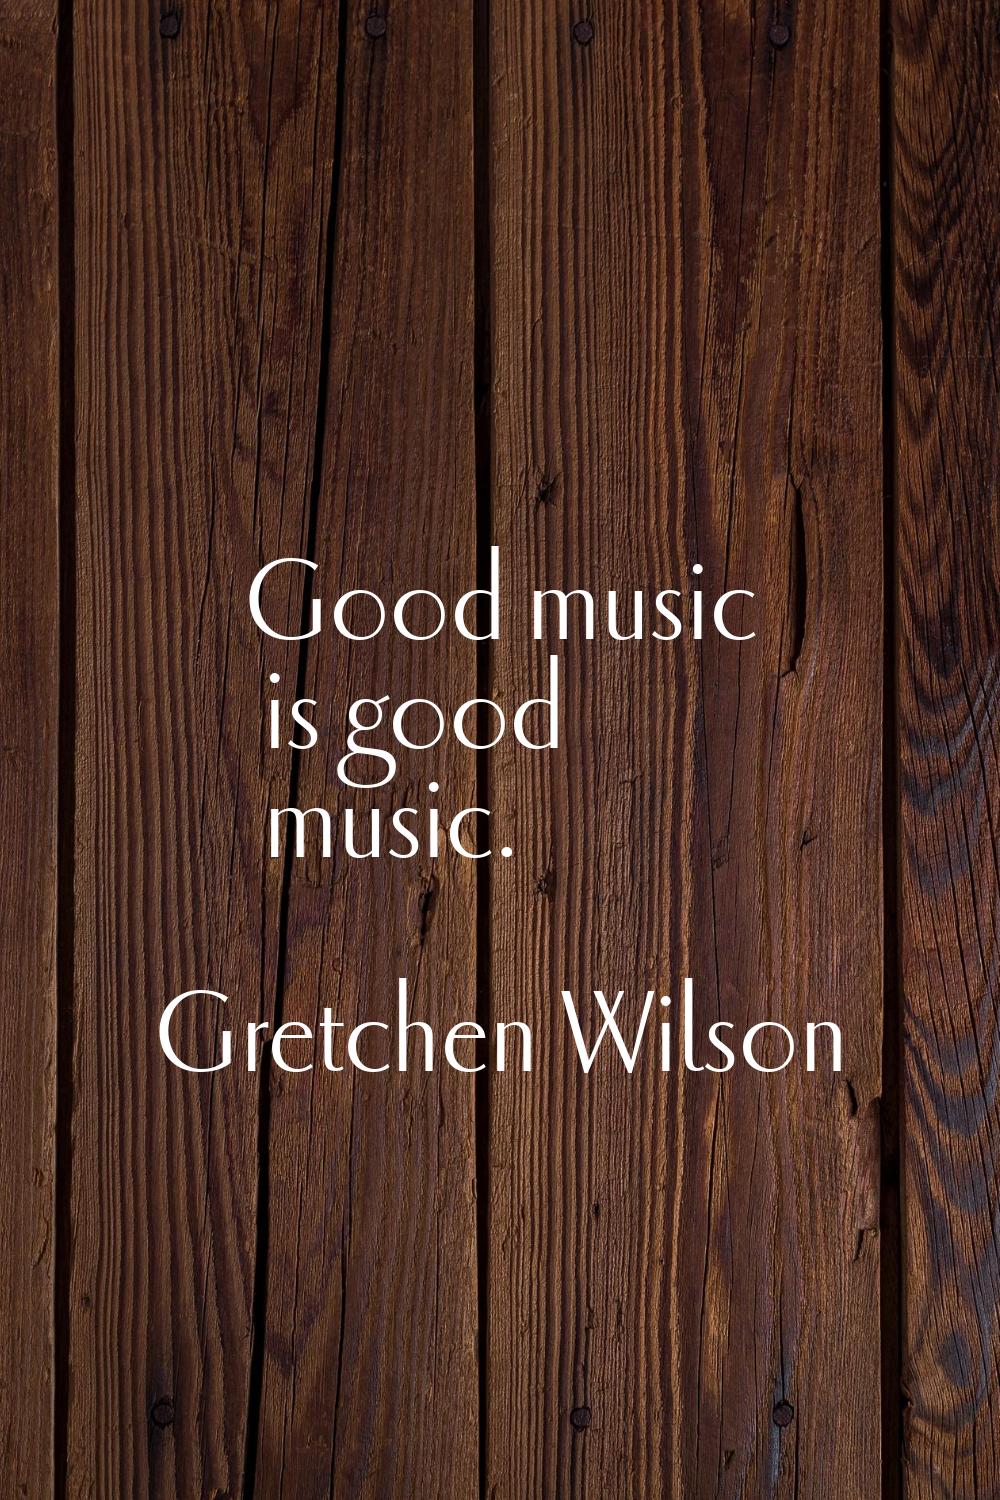 Good music is good music.